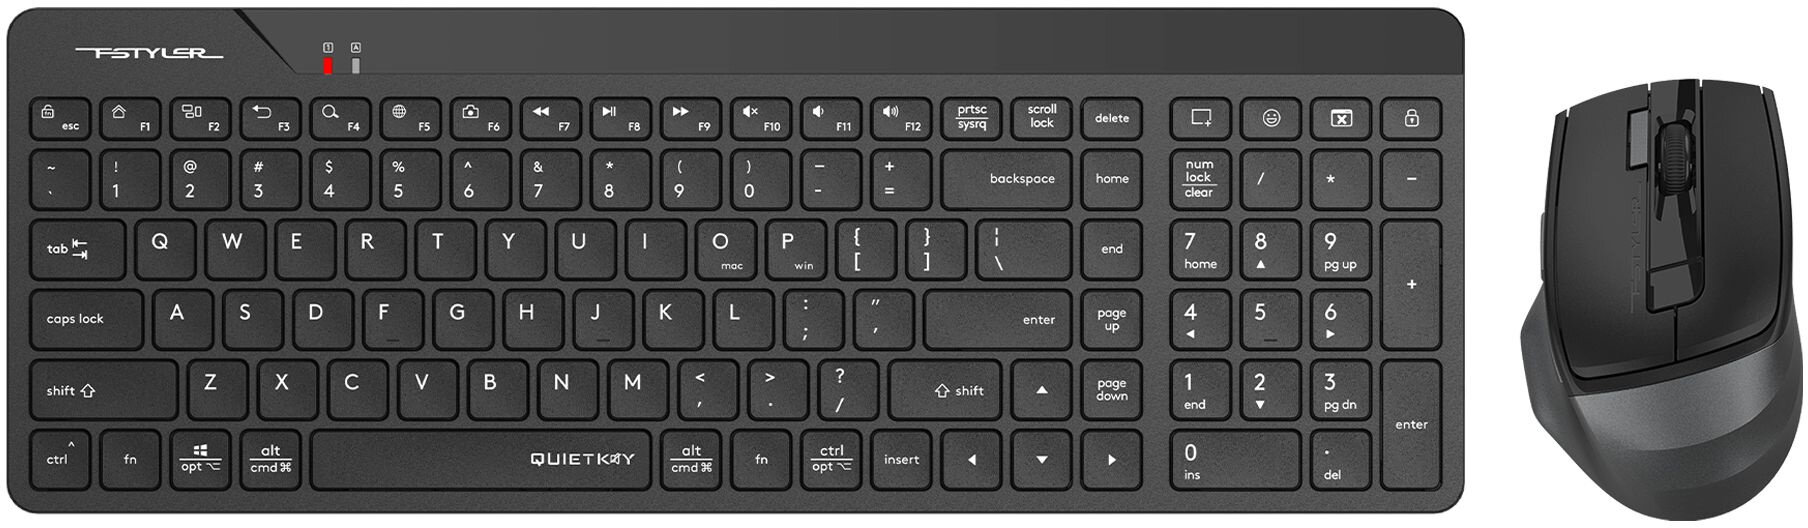 Клавиатура + мышь A4Tech Fstyler FG2400 Air клав: черный мышь: черный USB беспроводная slim (FG2400 AIR BLACK)